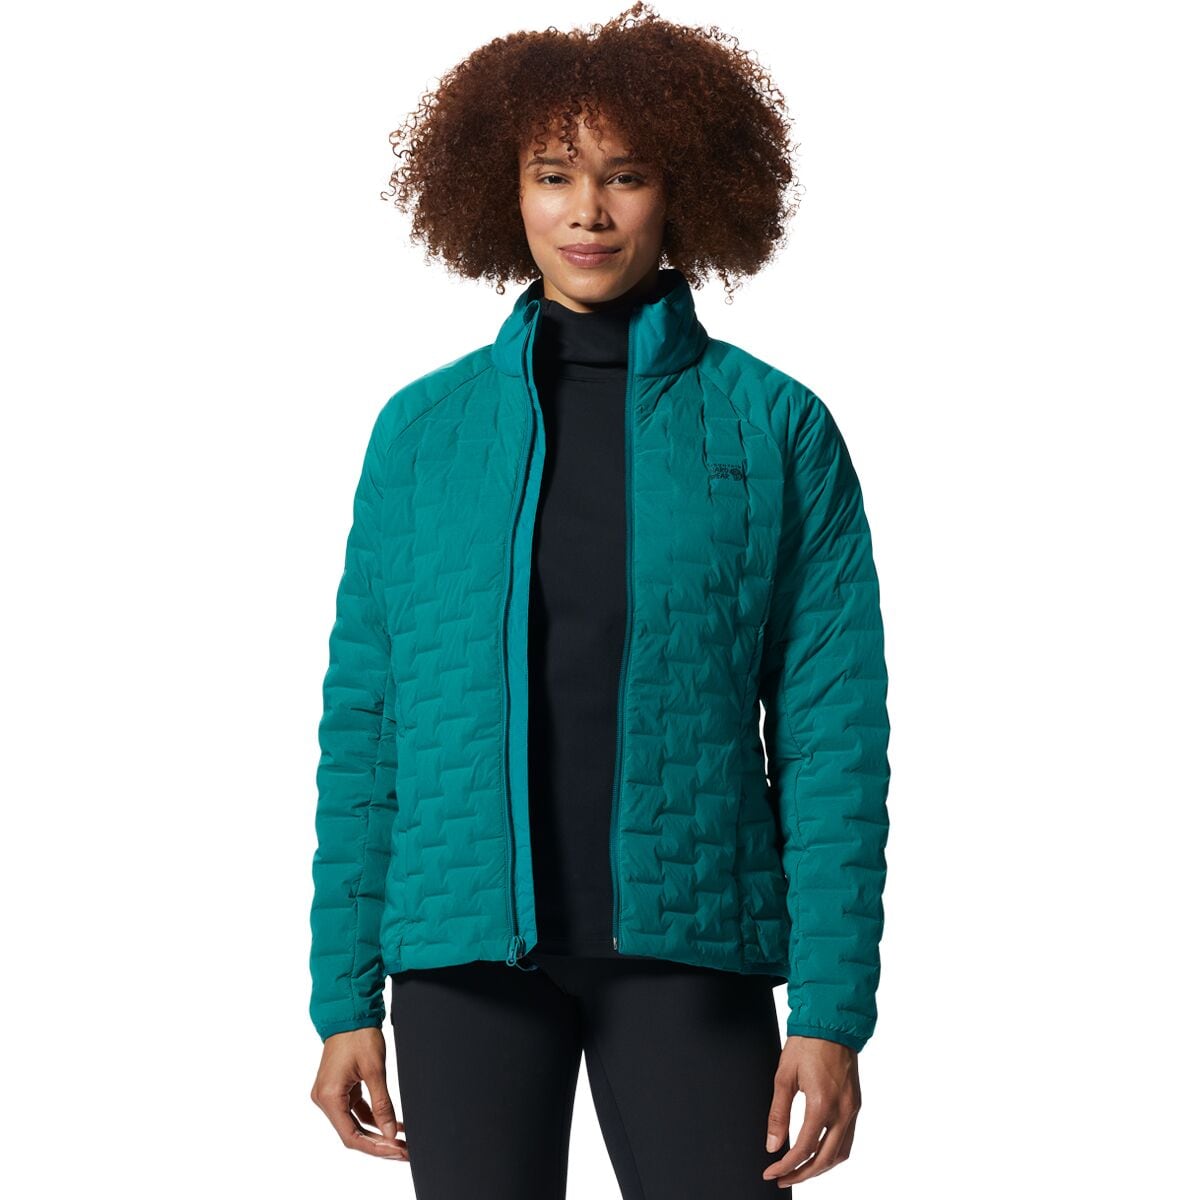 Mountain Hardwear Stretchdown Light Jacket - Women's - Clothing